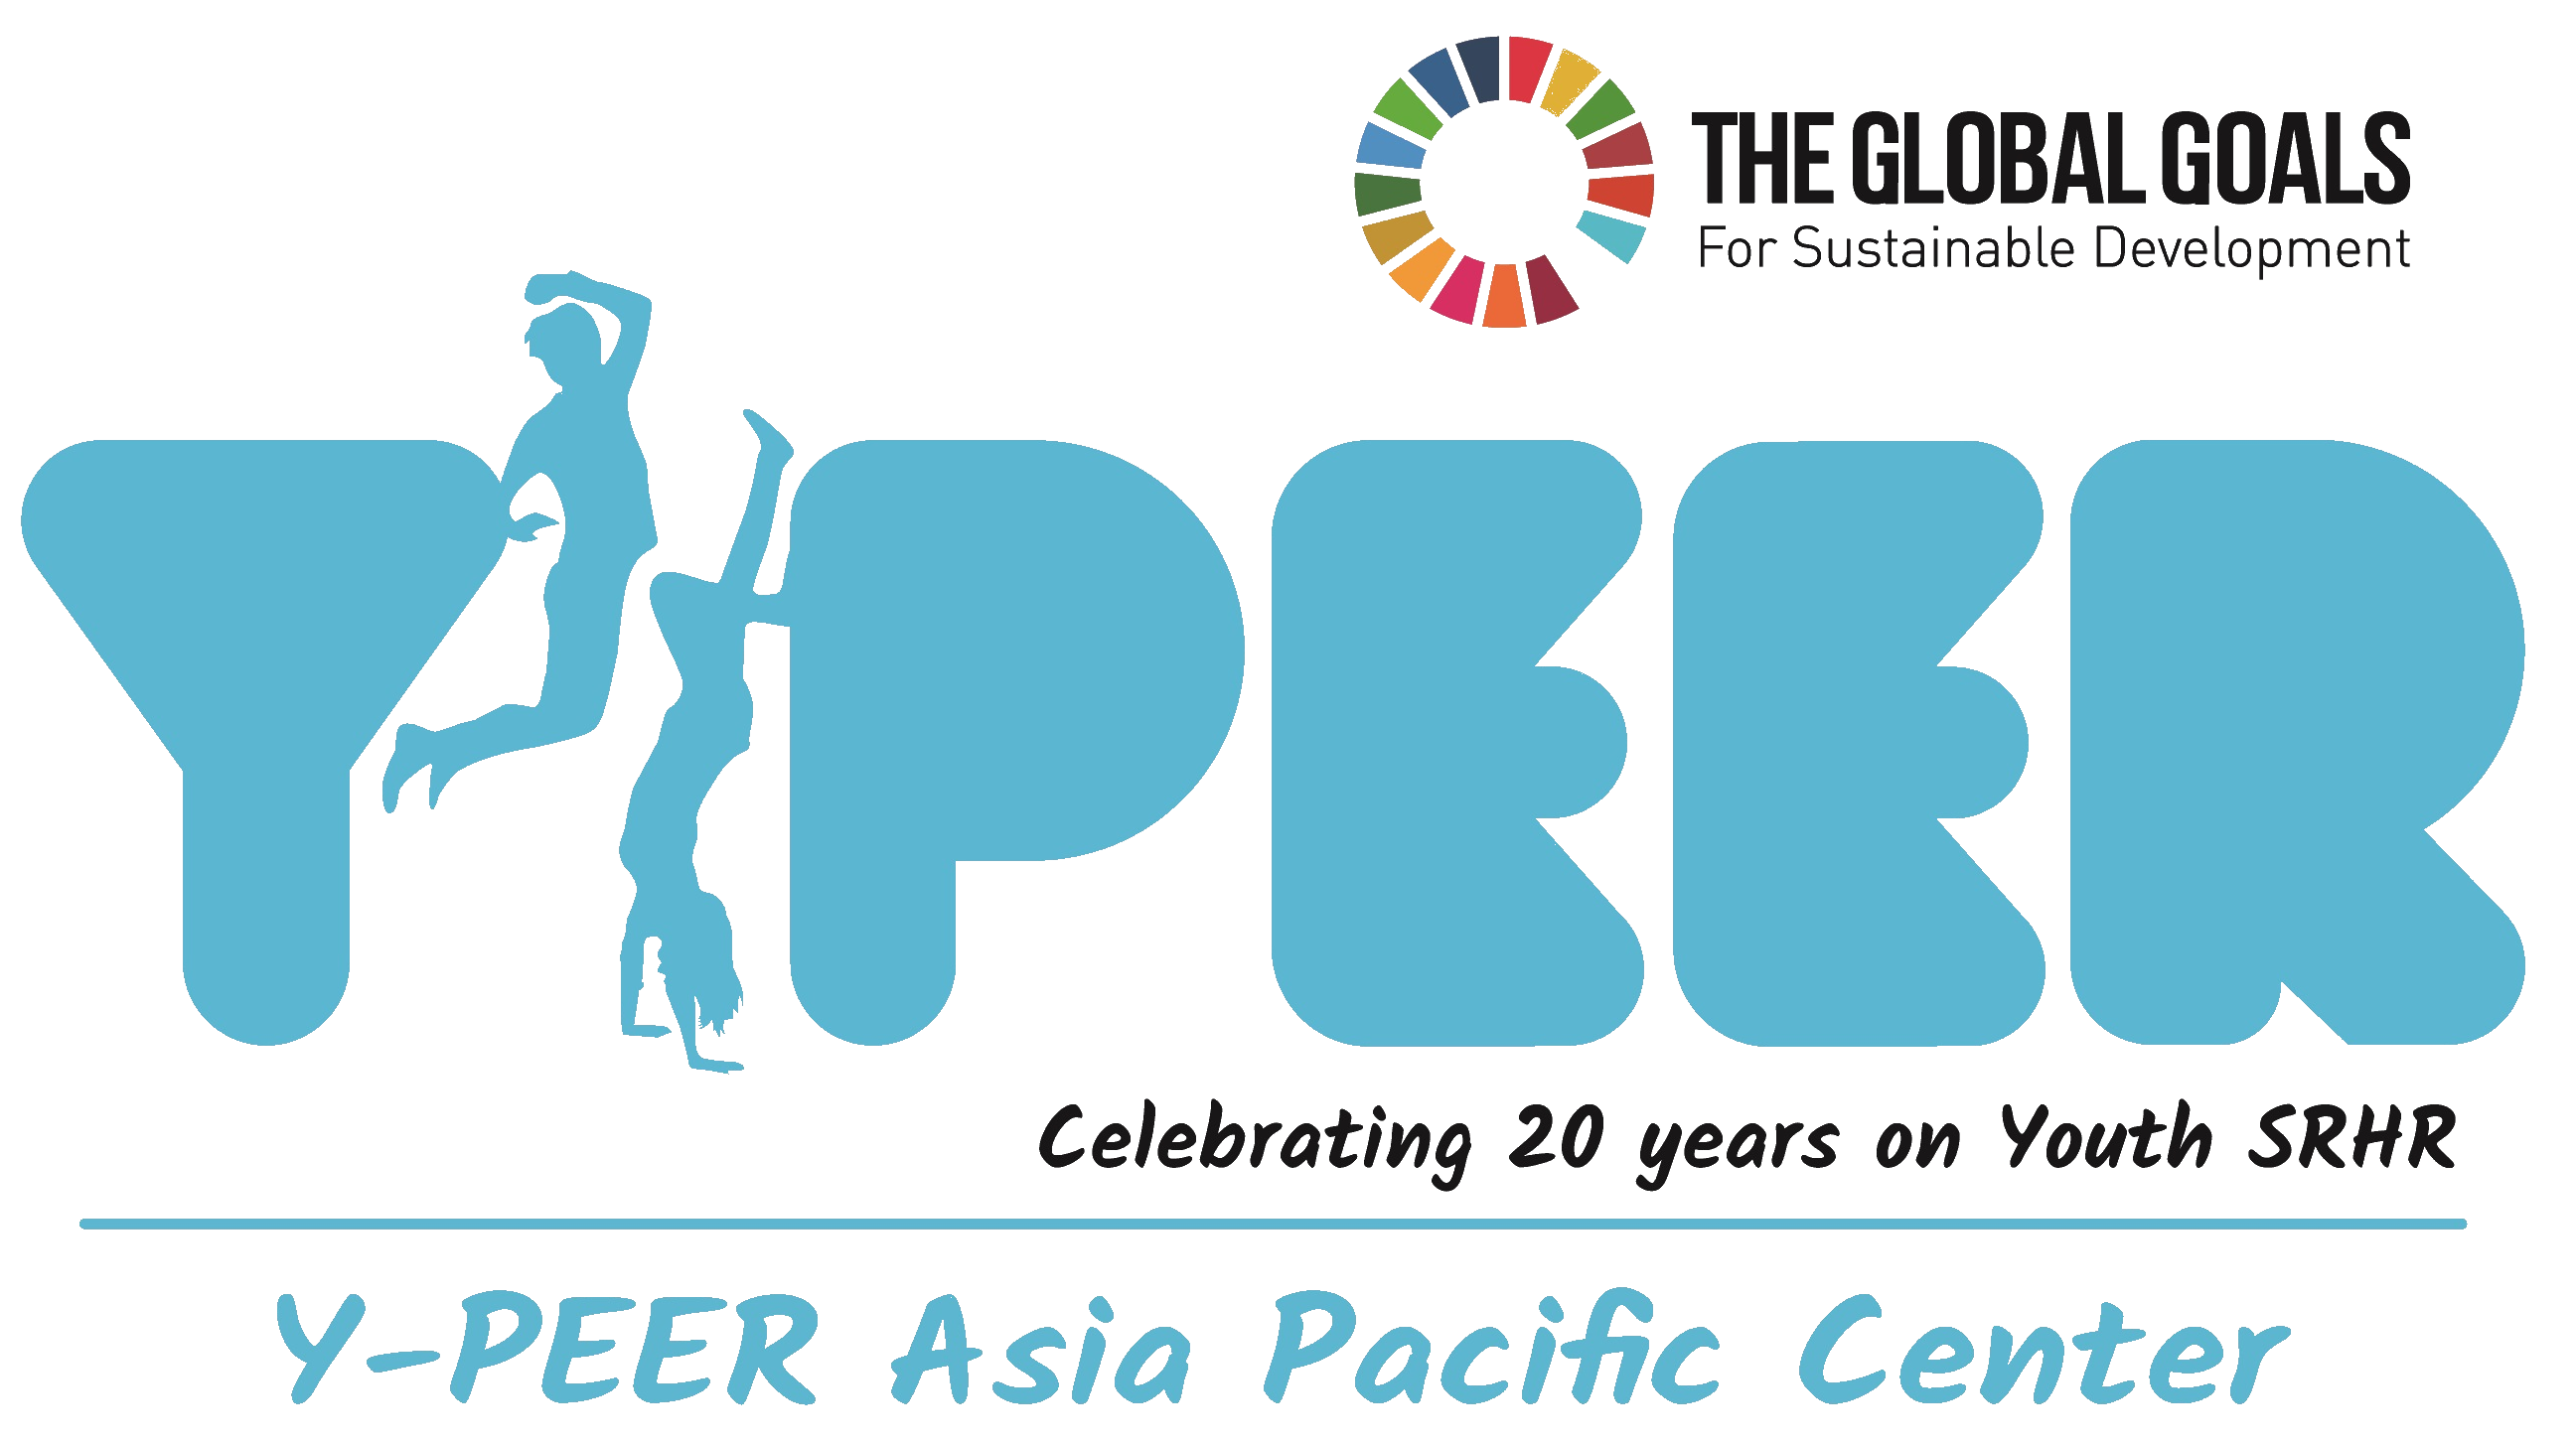 Y-PEER Asia Pacific Center